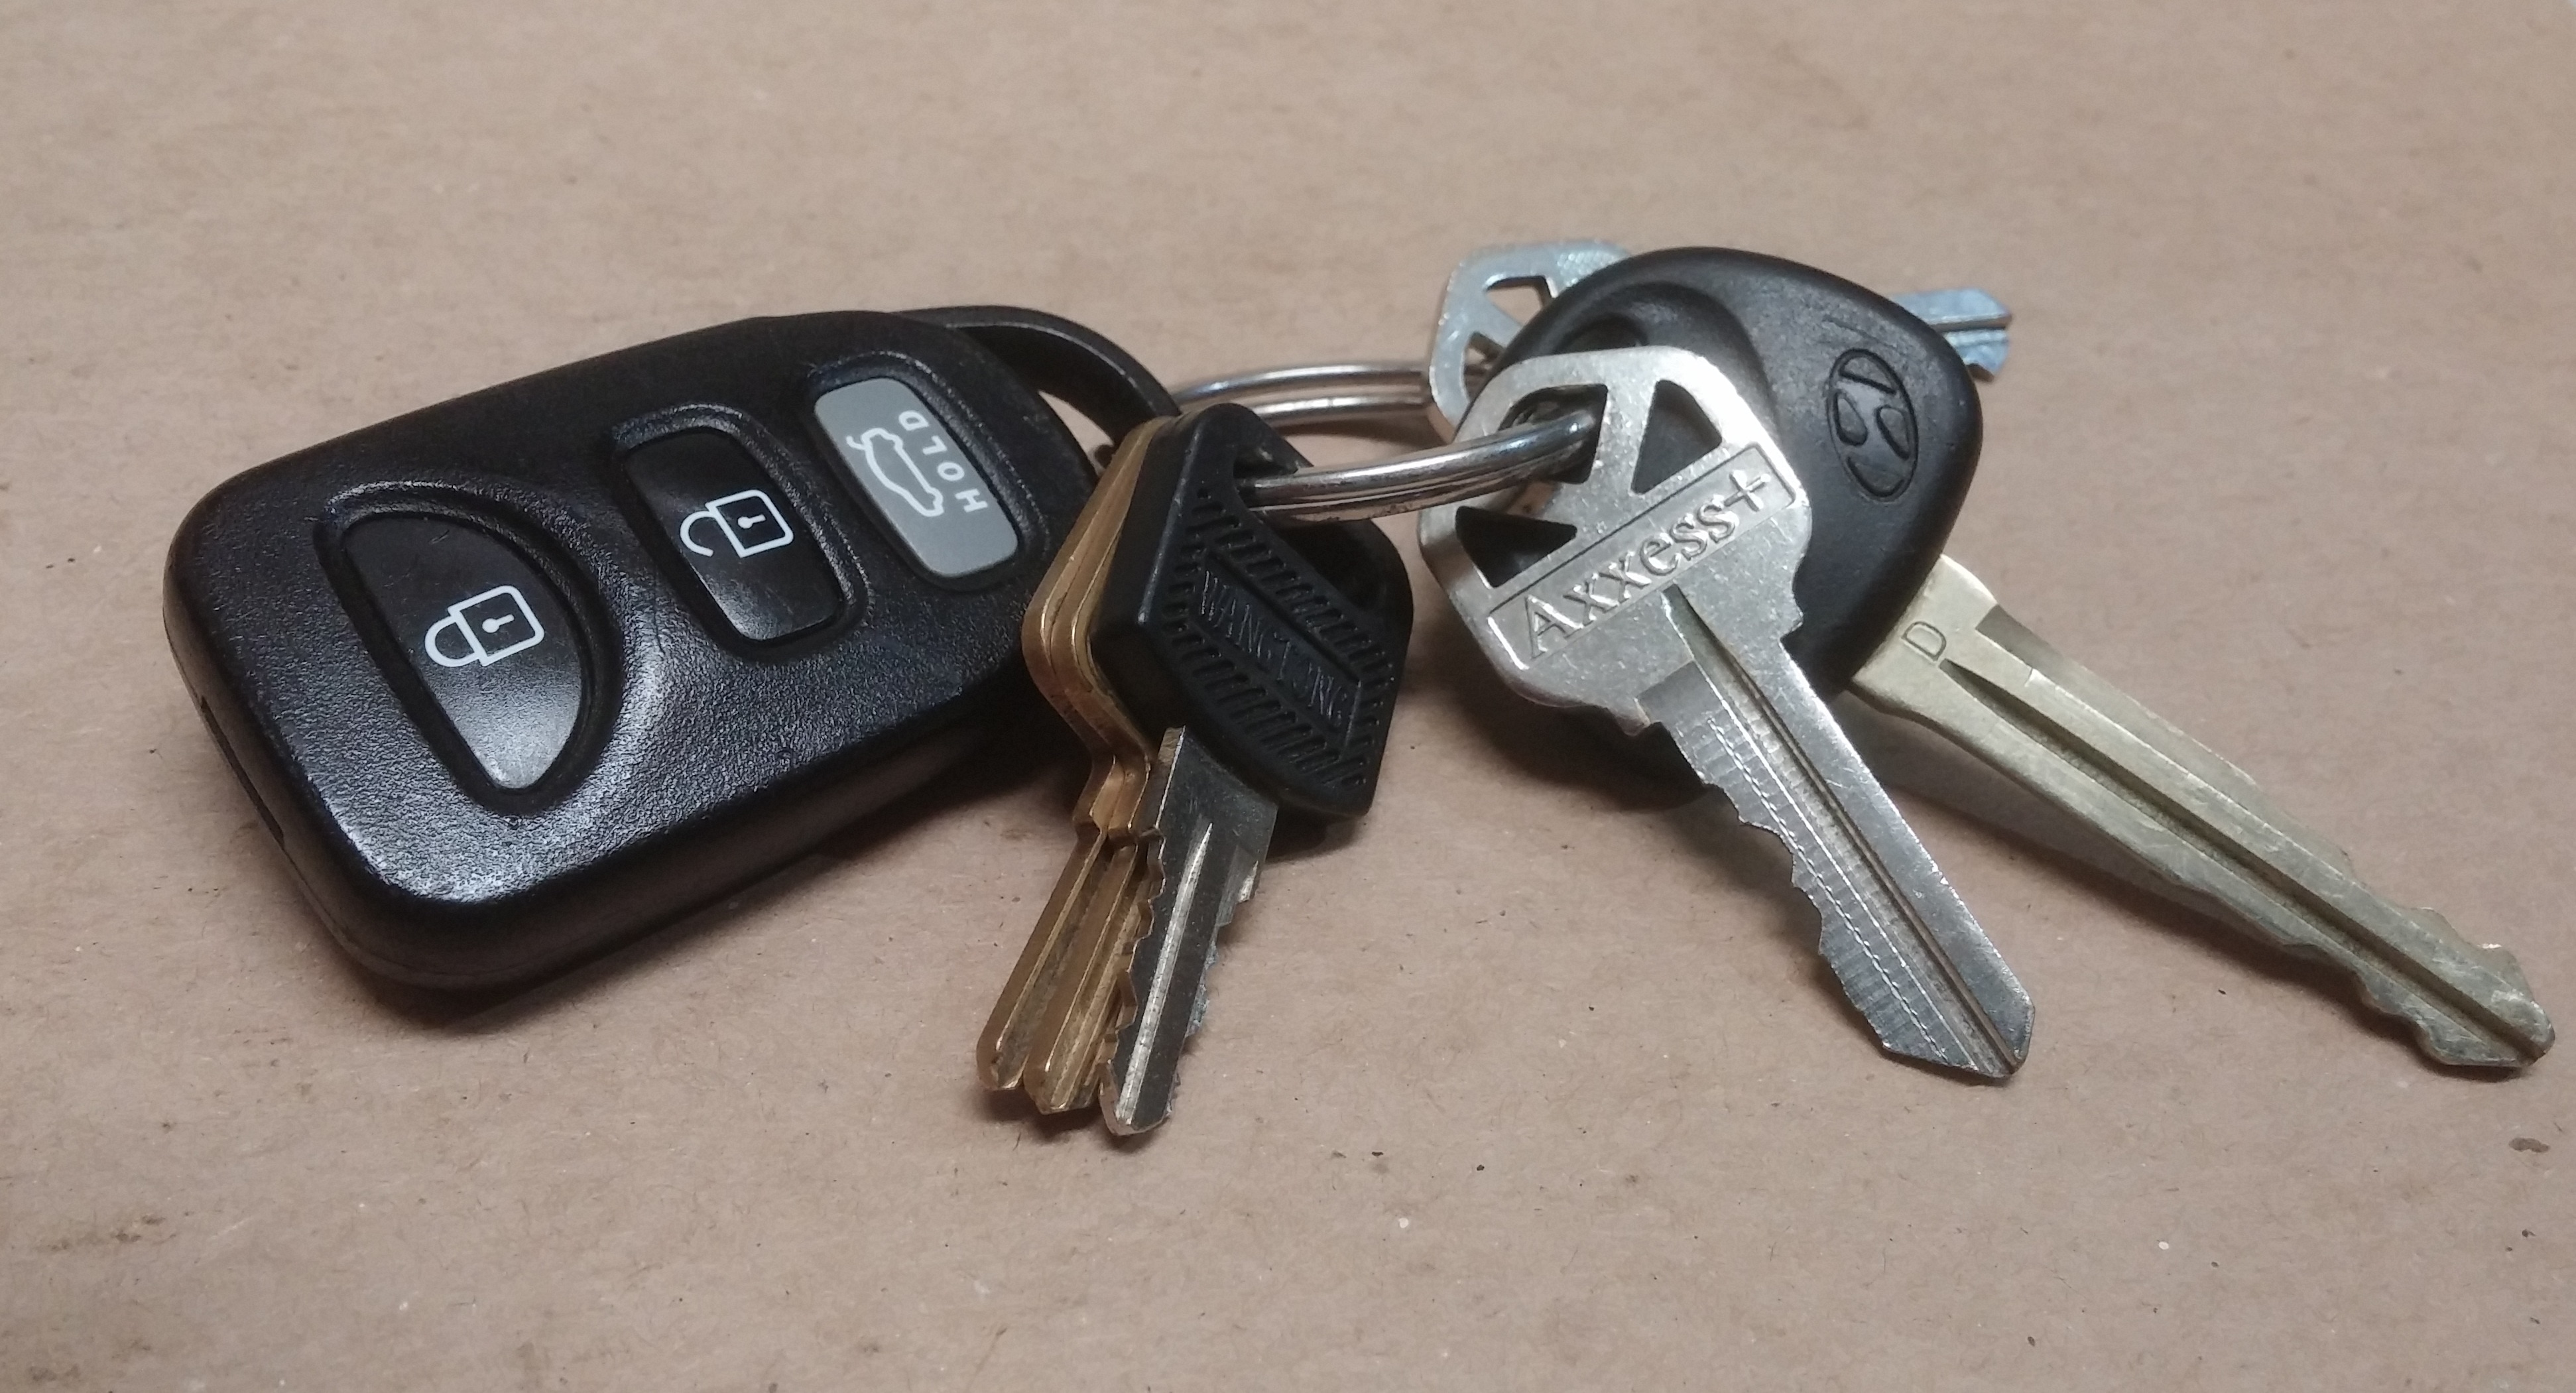 keys and car key fob